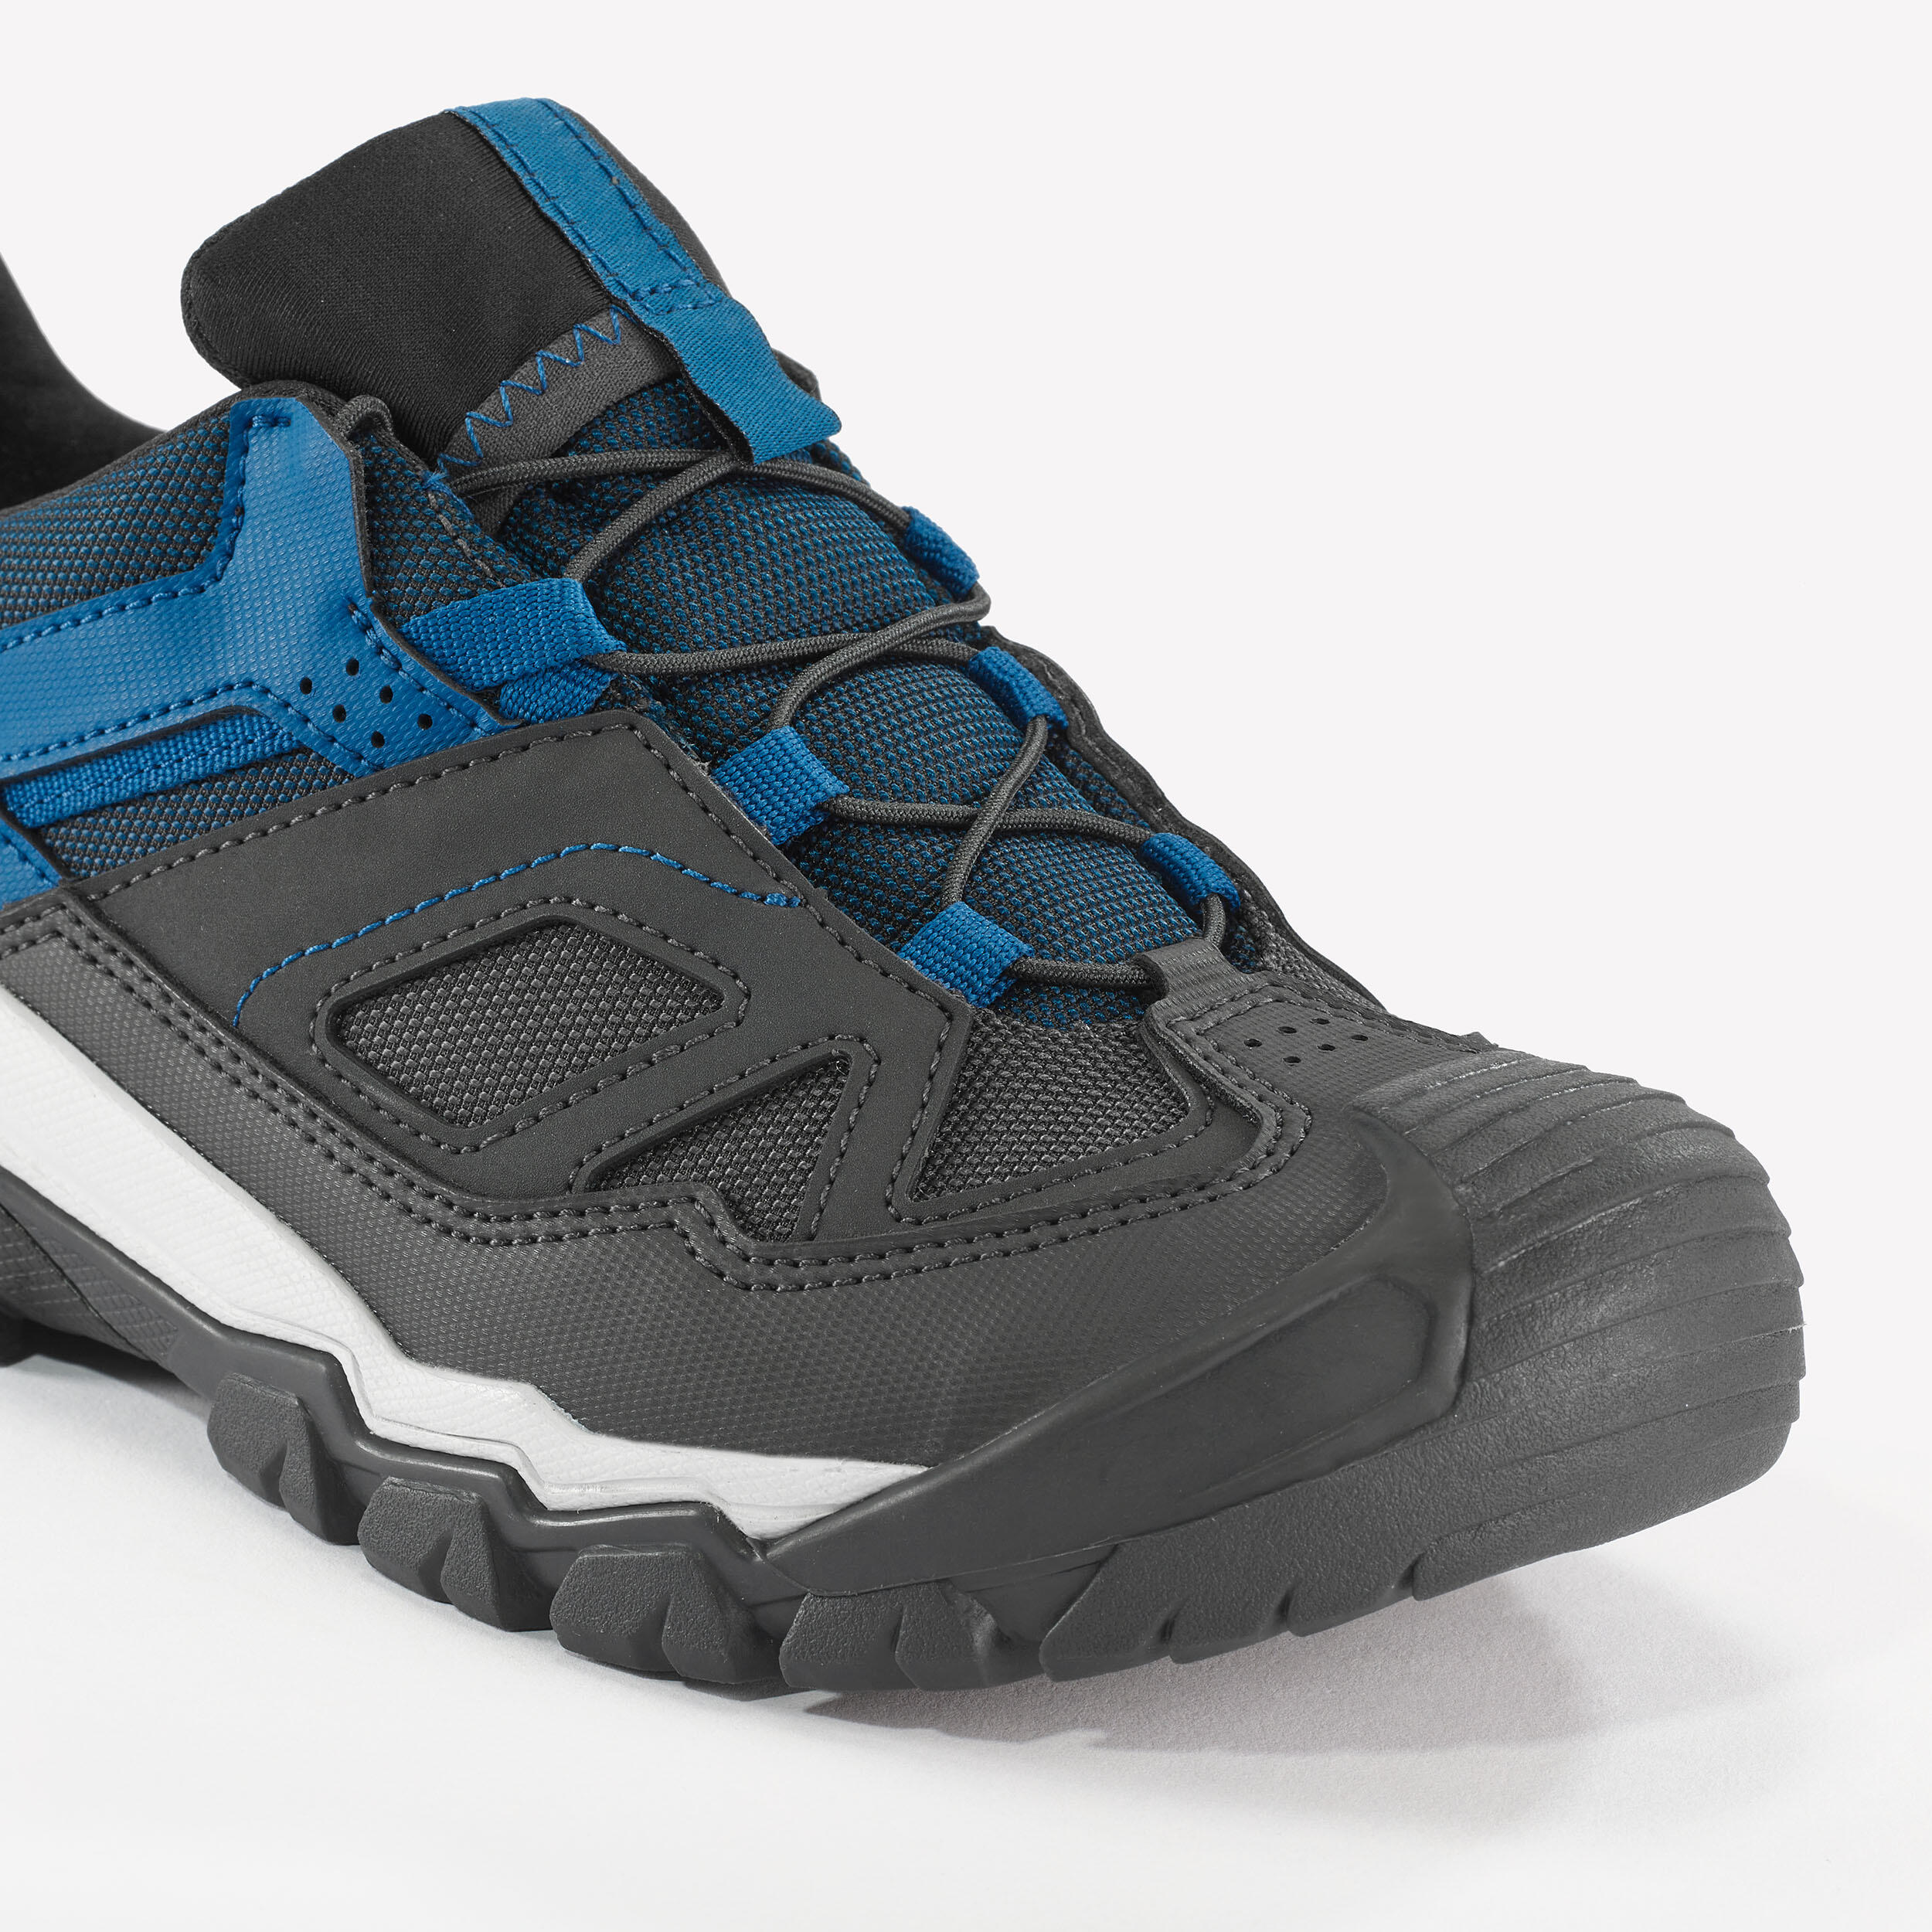 Kids’ Waterproof Lace-up Hiking Shoes - CROSSROCK UK size 2.5 - 5 - Blue 8/10